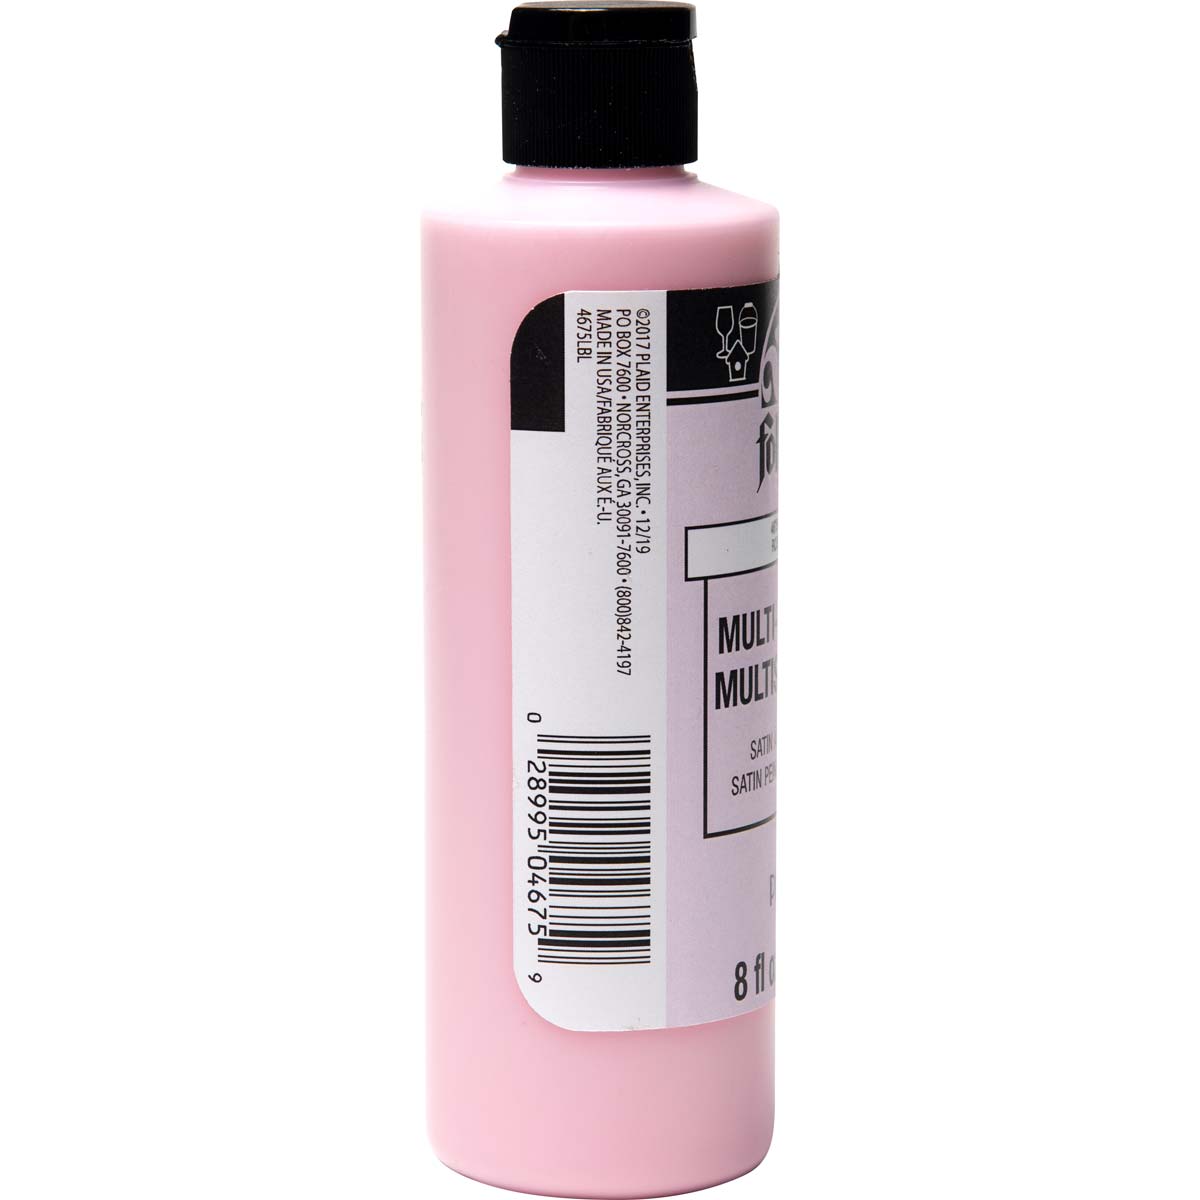 FolkArt ® Multi-Surface Satin Acrylic Paints - Baby Pink, 8 oz. - 4675